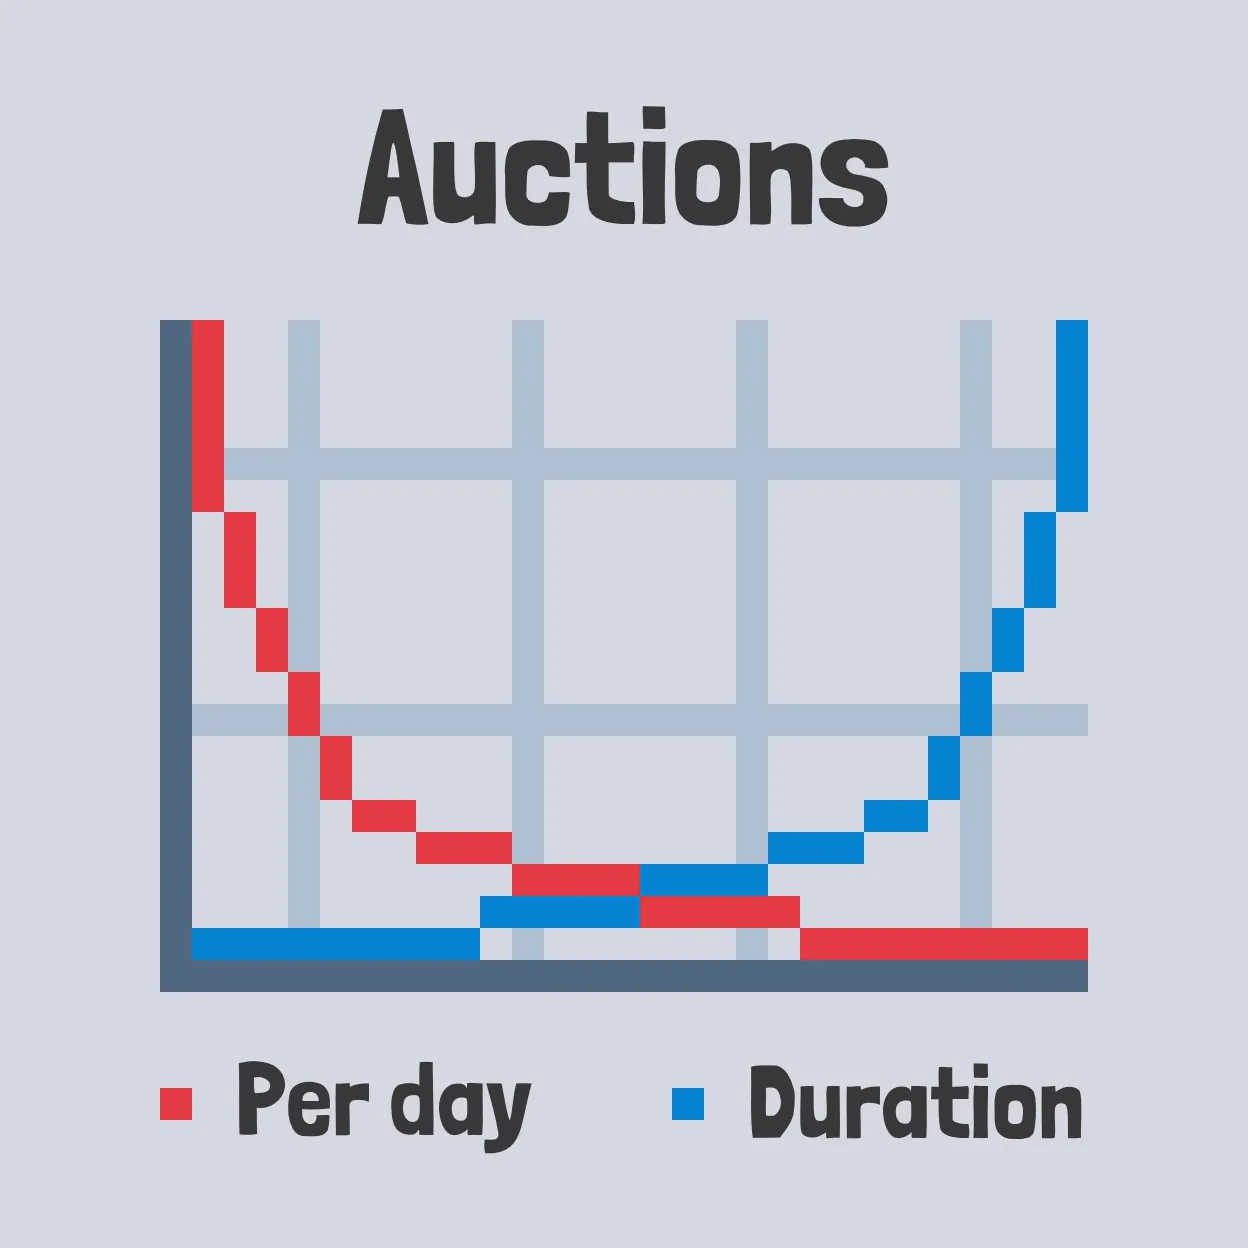 auction-chart.aa1e89a3.jpeg